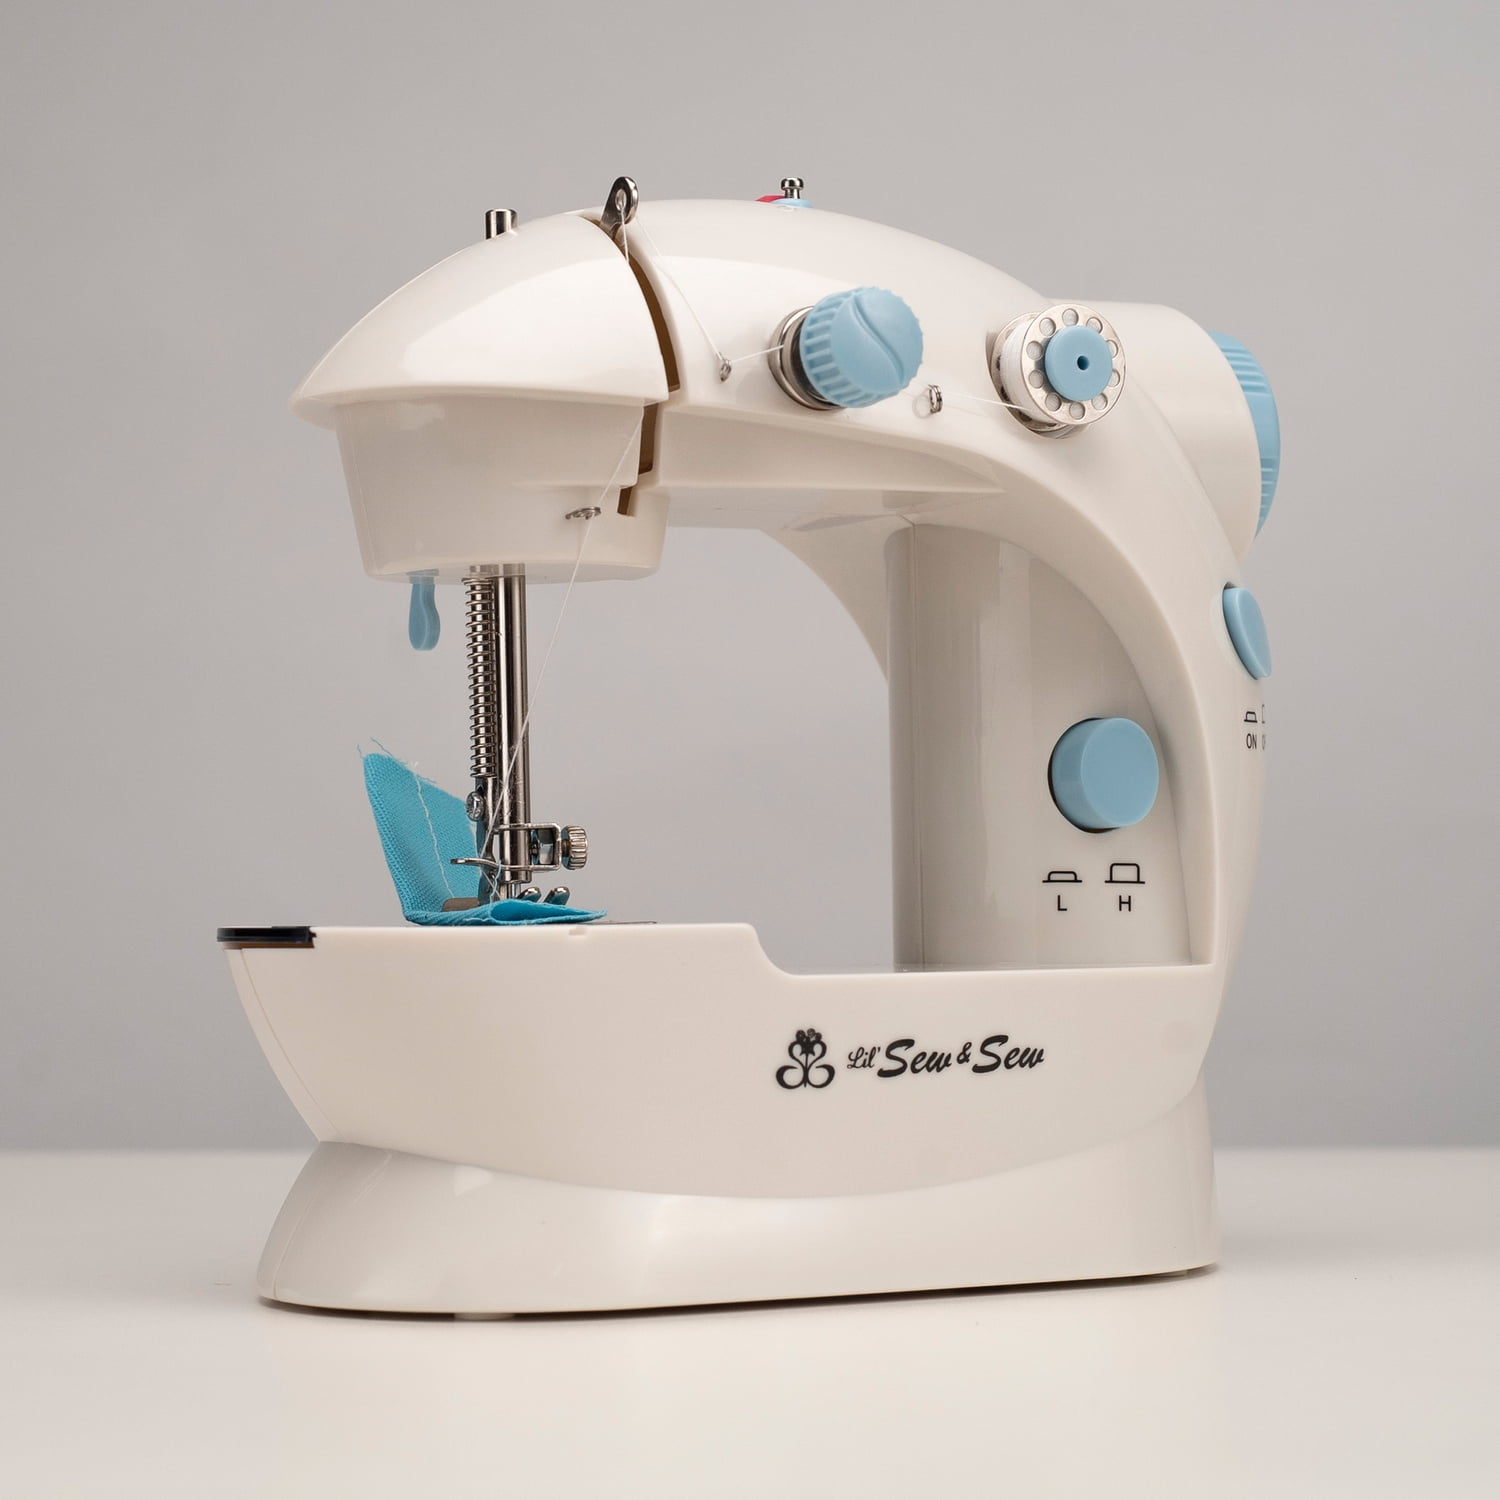  Michley LSS-202 Lil' Sew & Sew mini máquina de coser